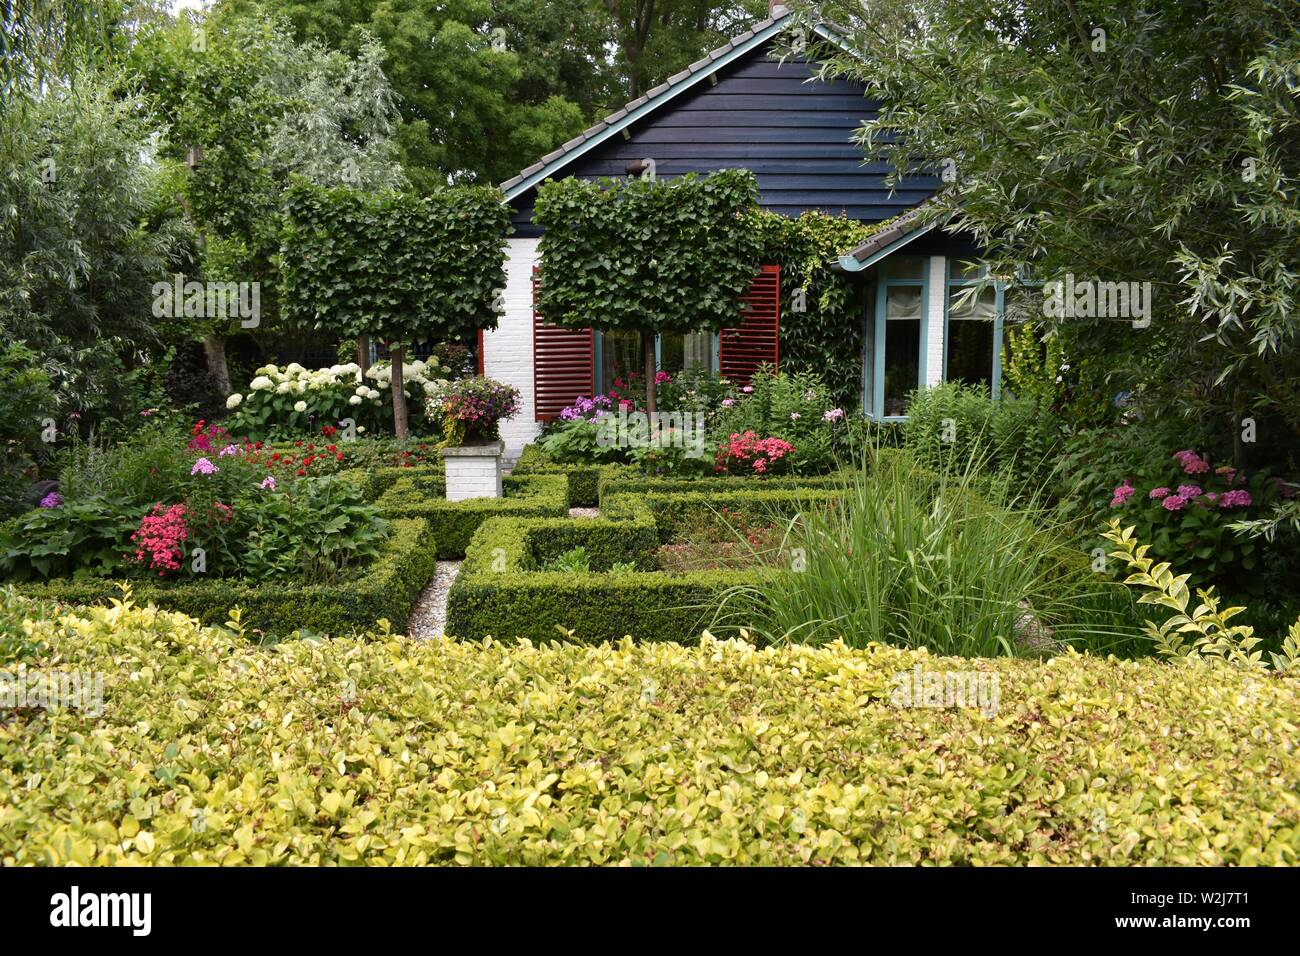 tiny house garden stock photos & tiny house garden stock images - alamy